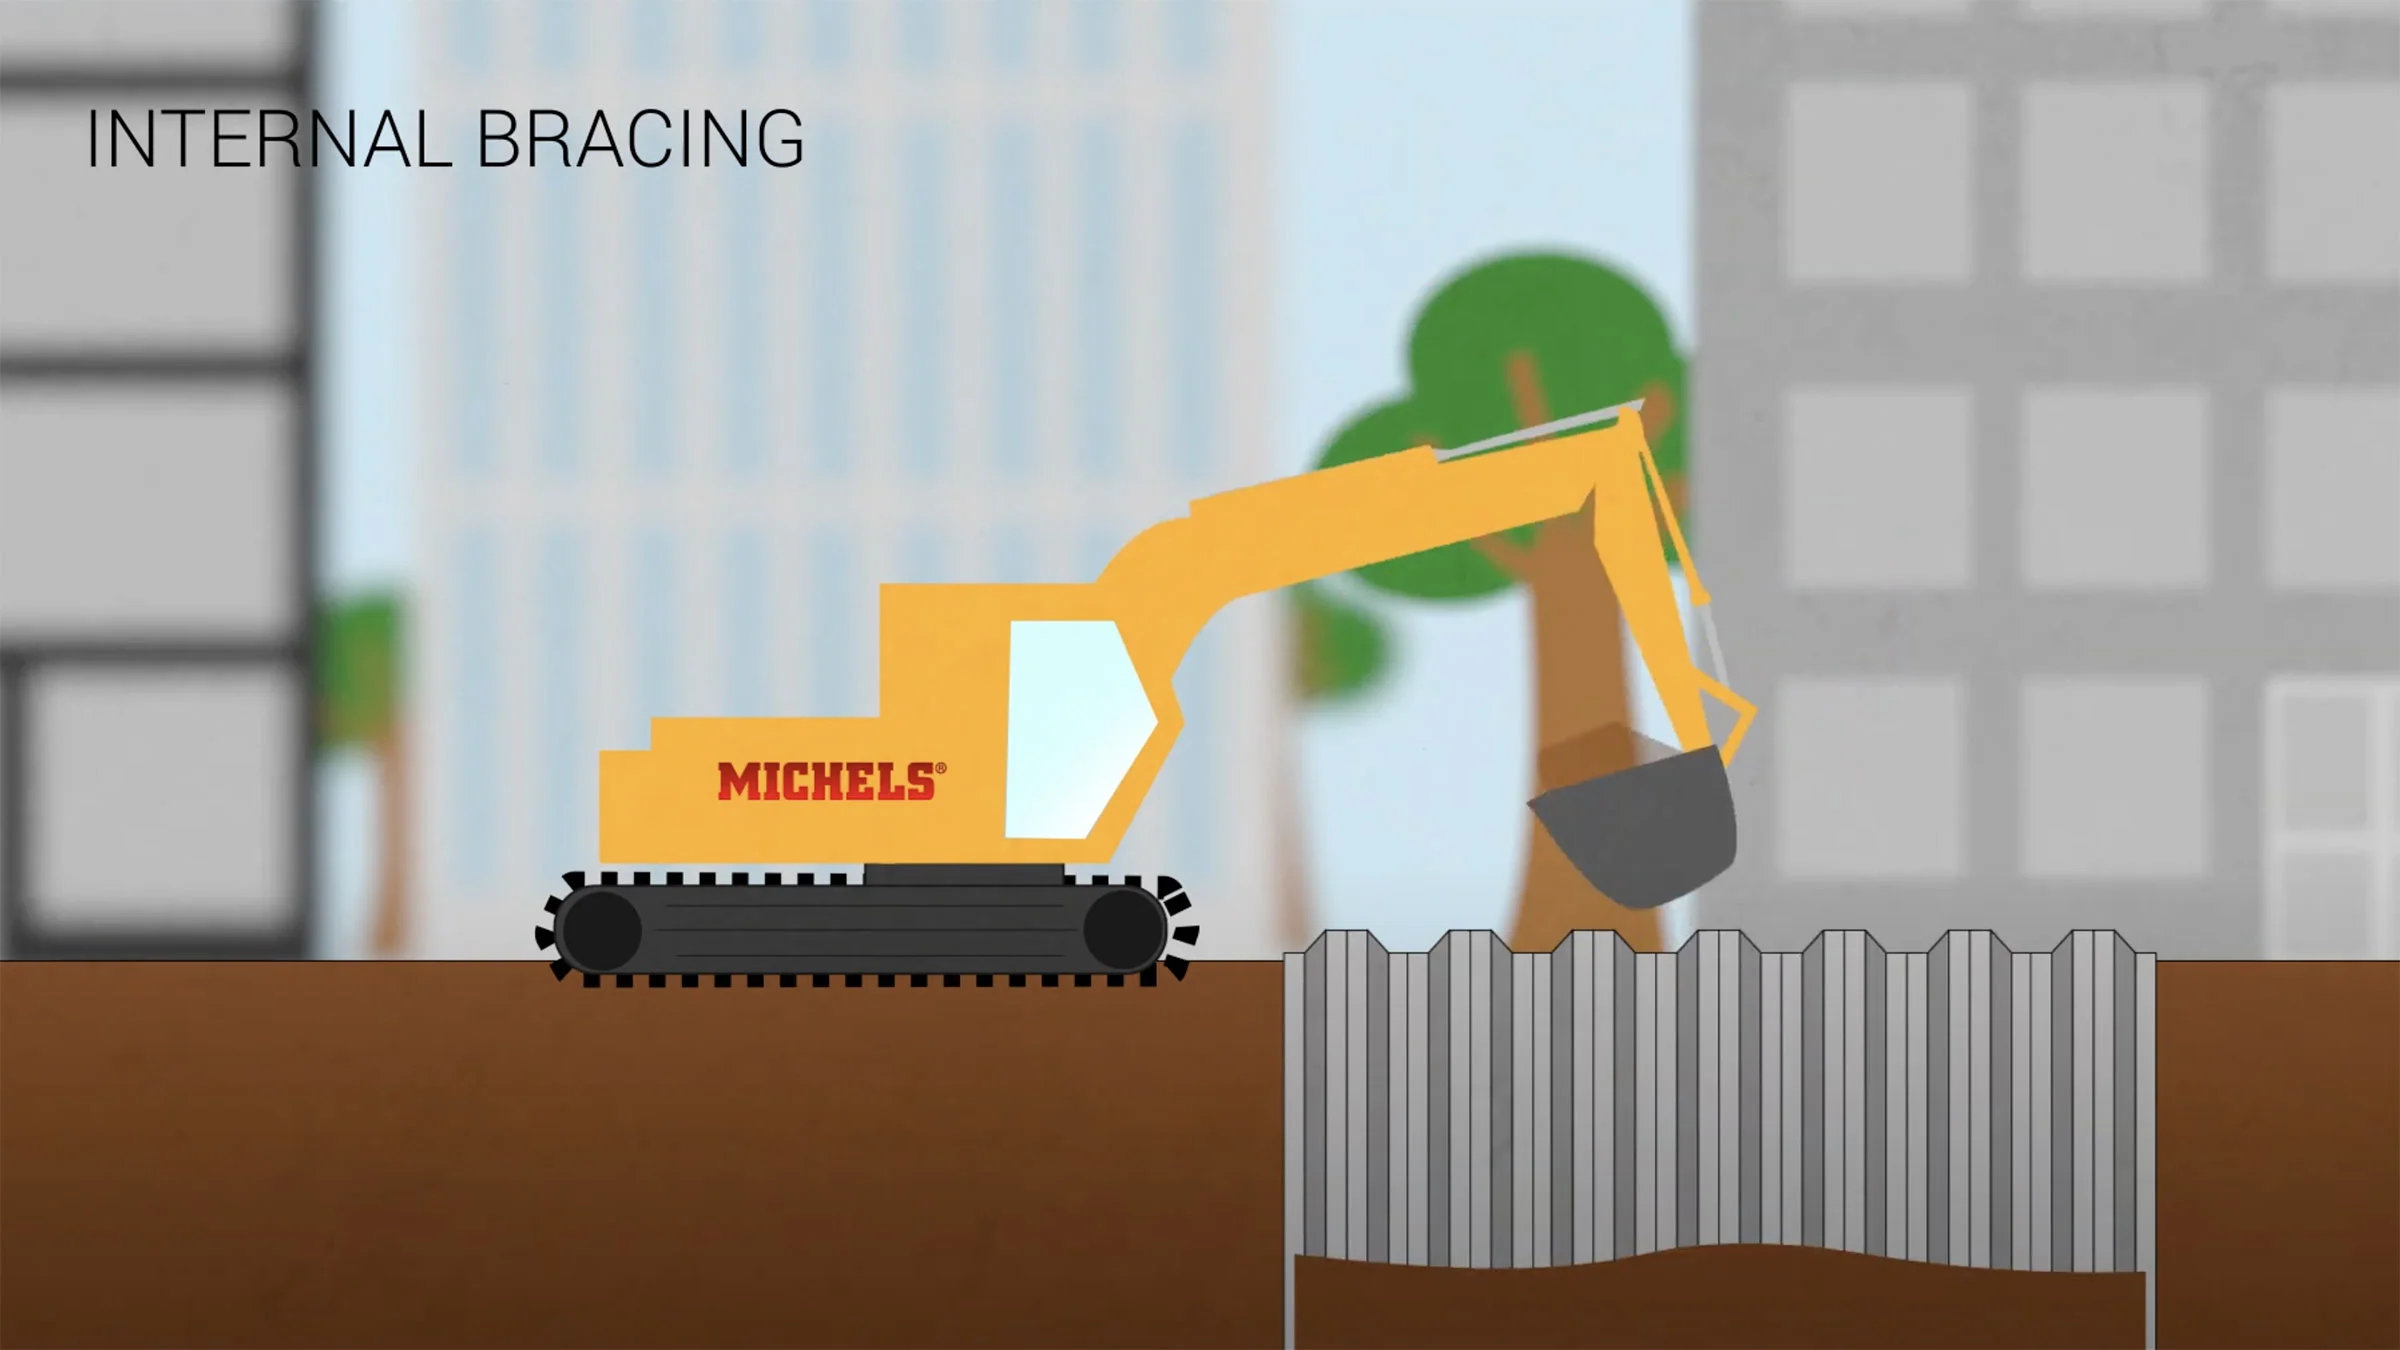 An animated excavator performs the job of internal bracing.